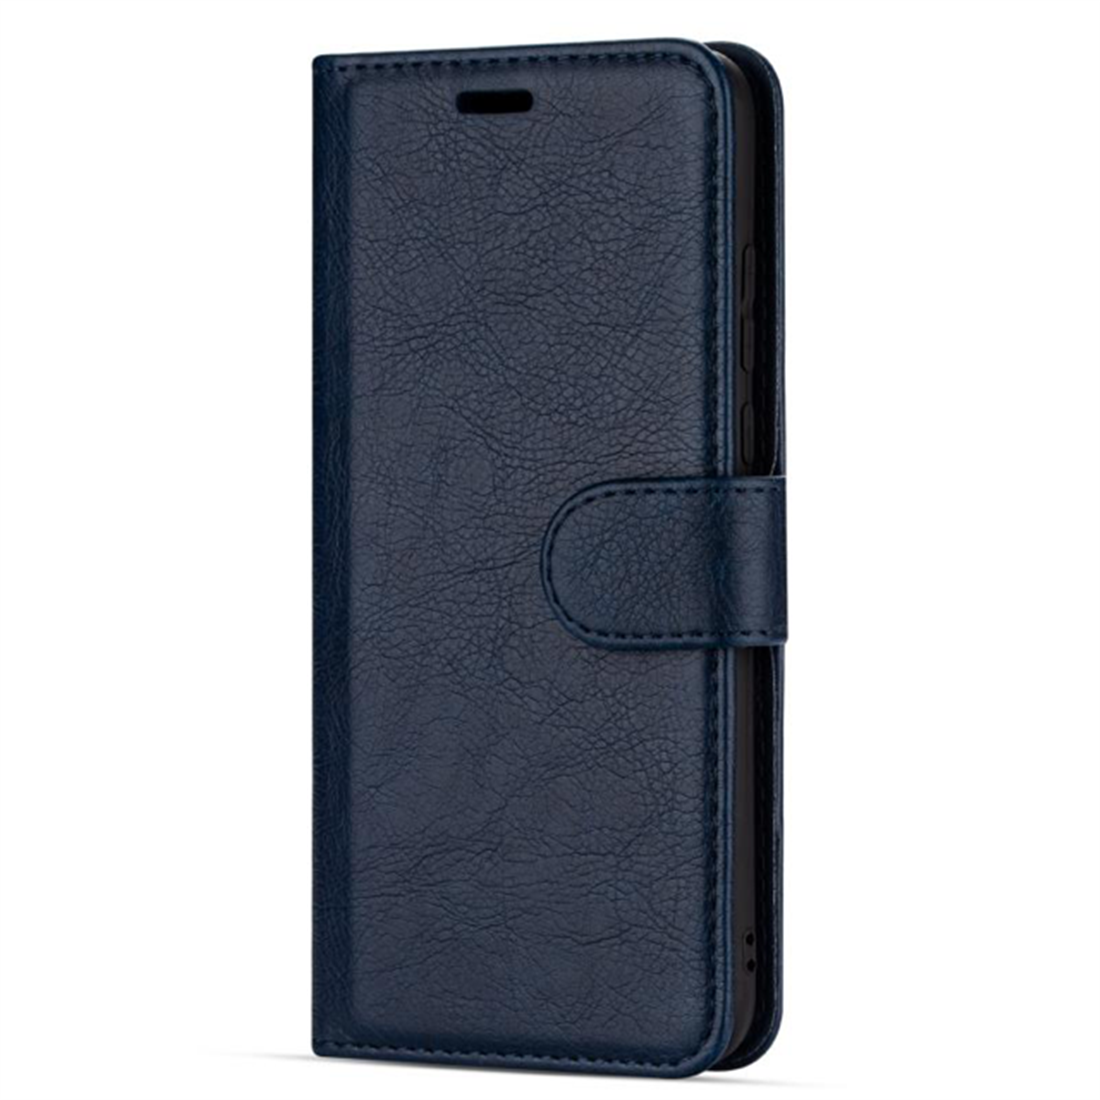 Wallet Case L voor Samsun Galaxy A40 Blauw